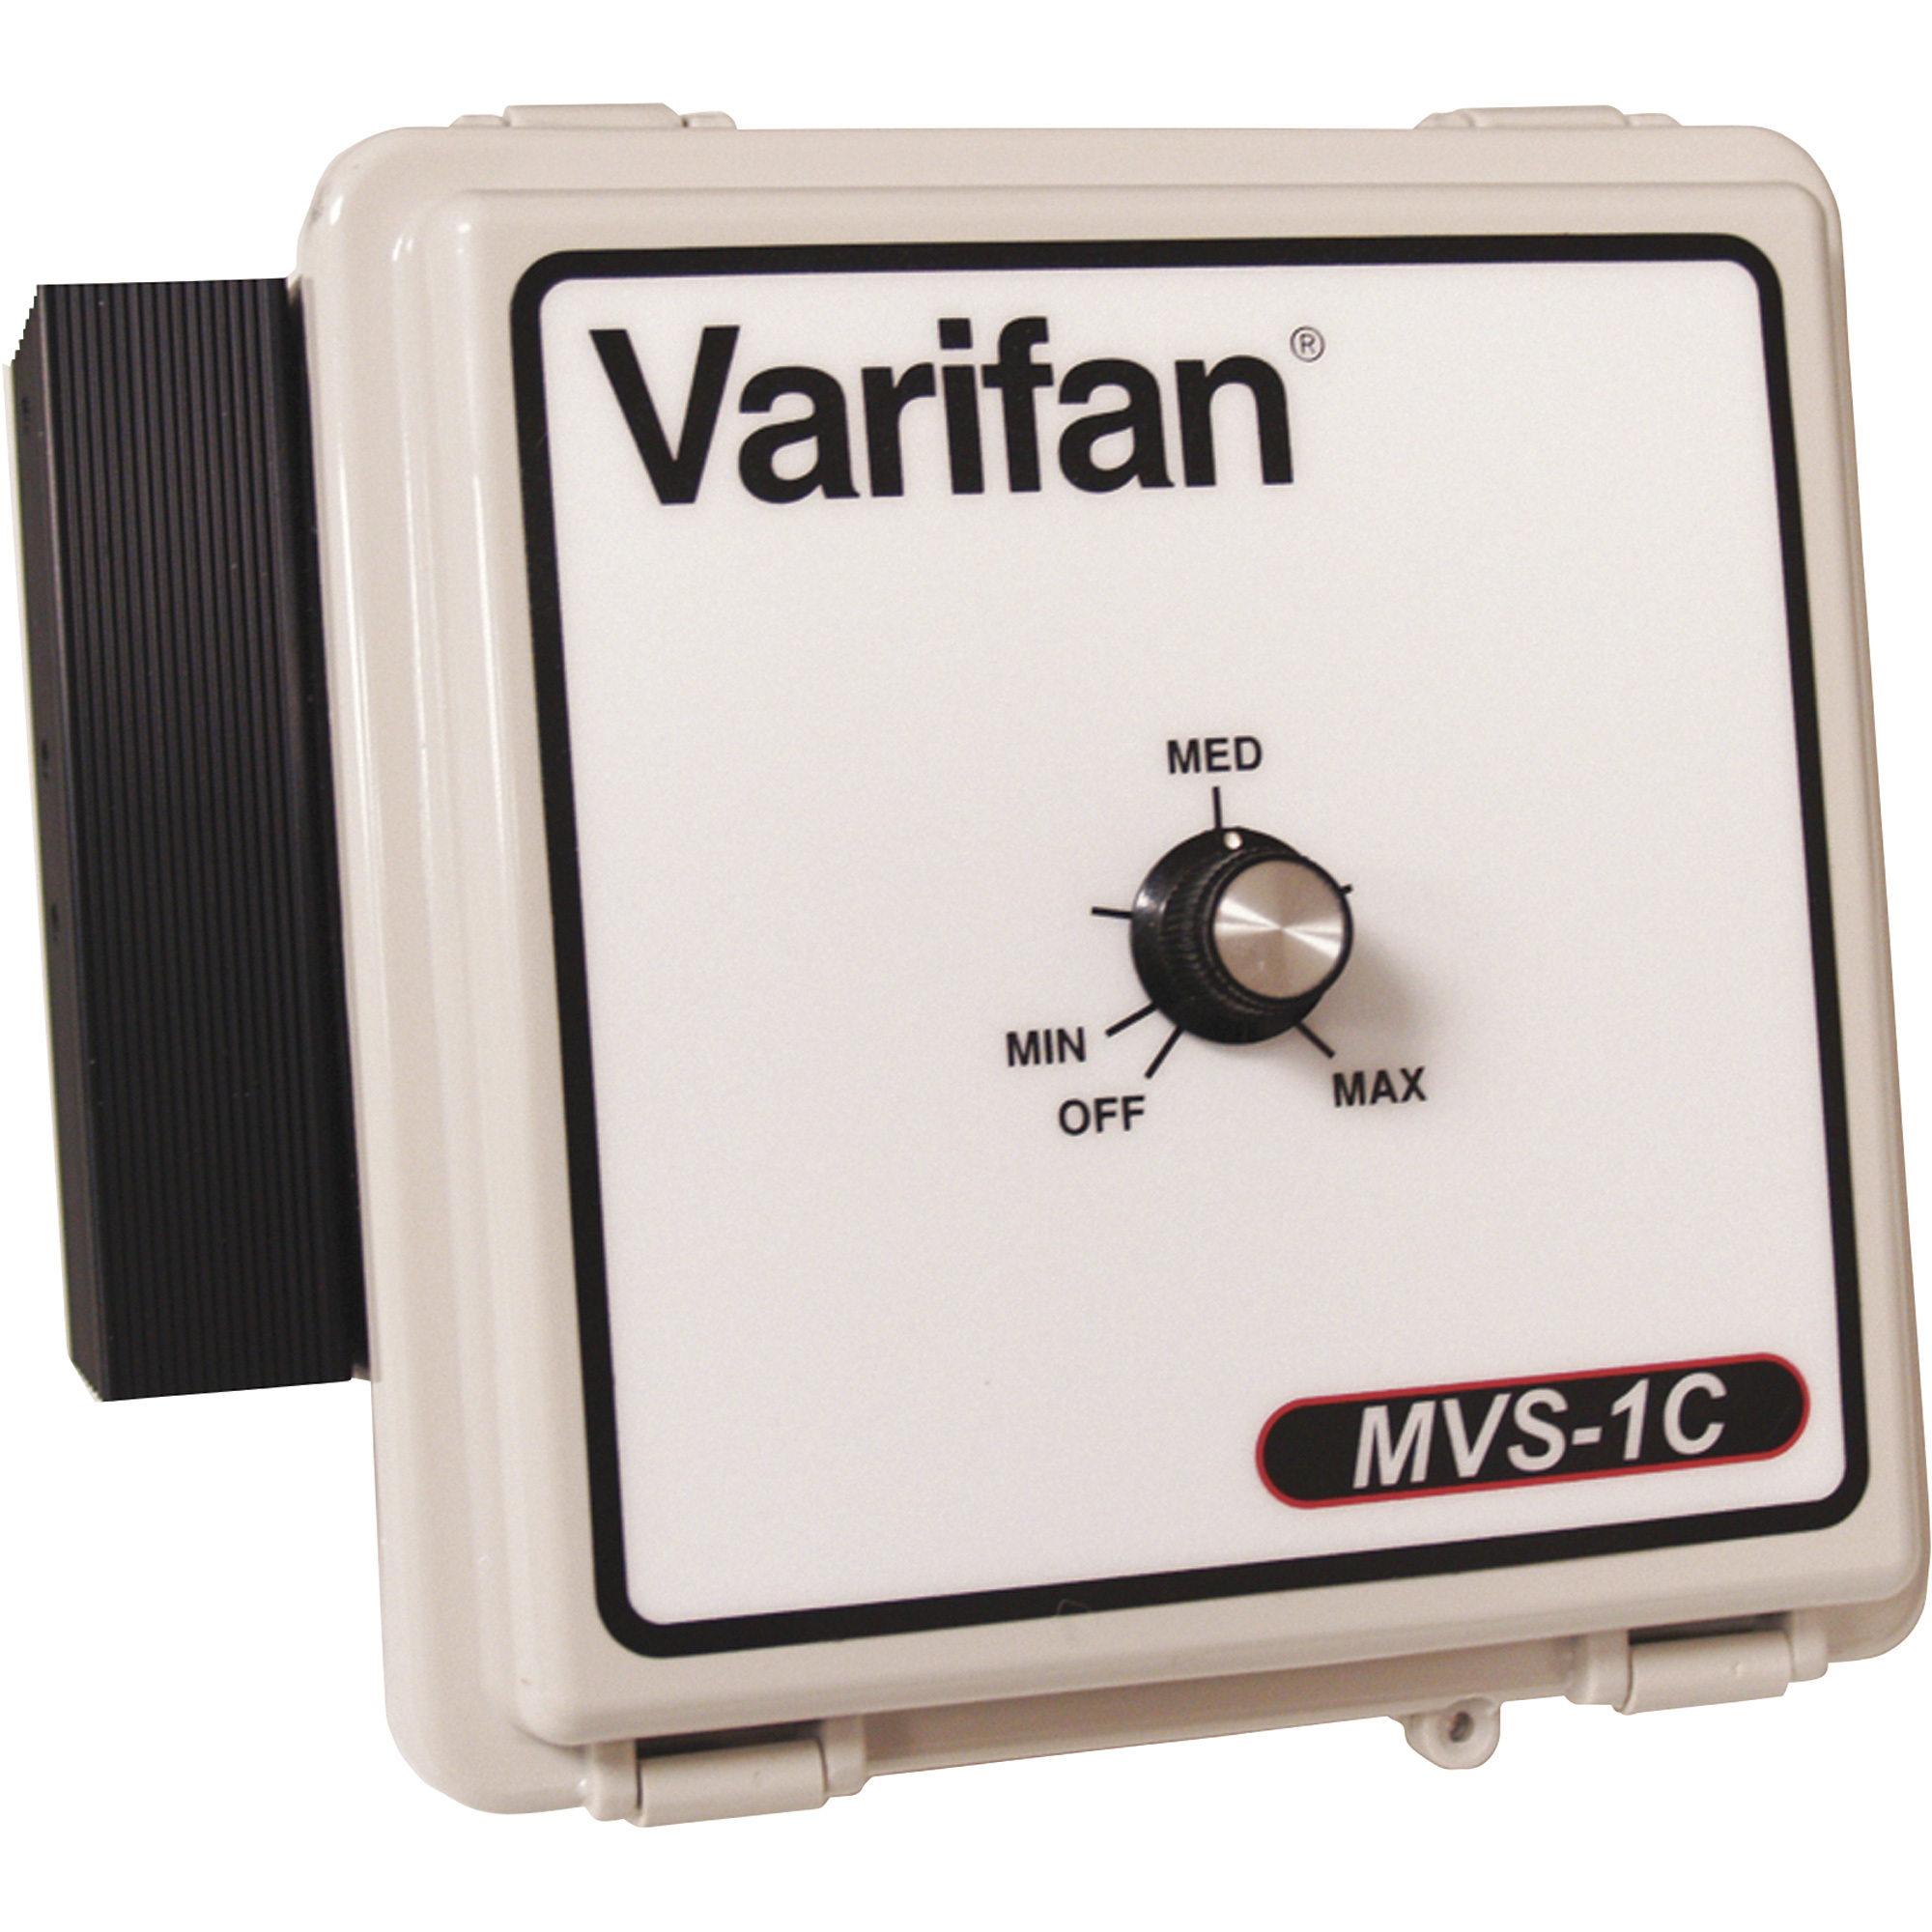 Multifan Varifan Electric Manual Speed Control, Model VFMVS-1C/S